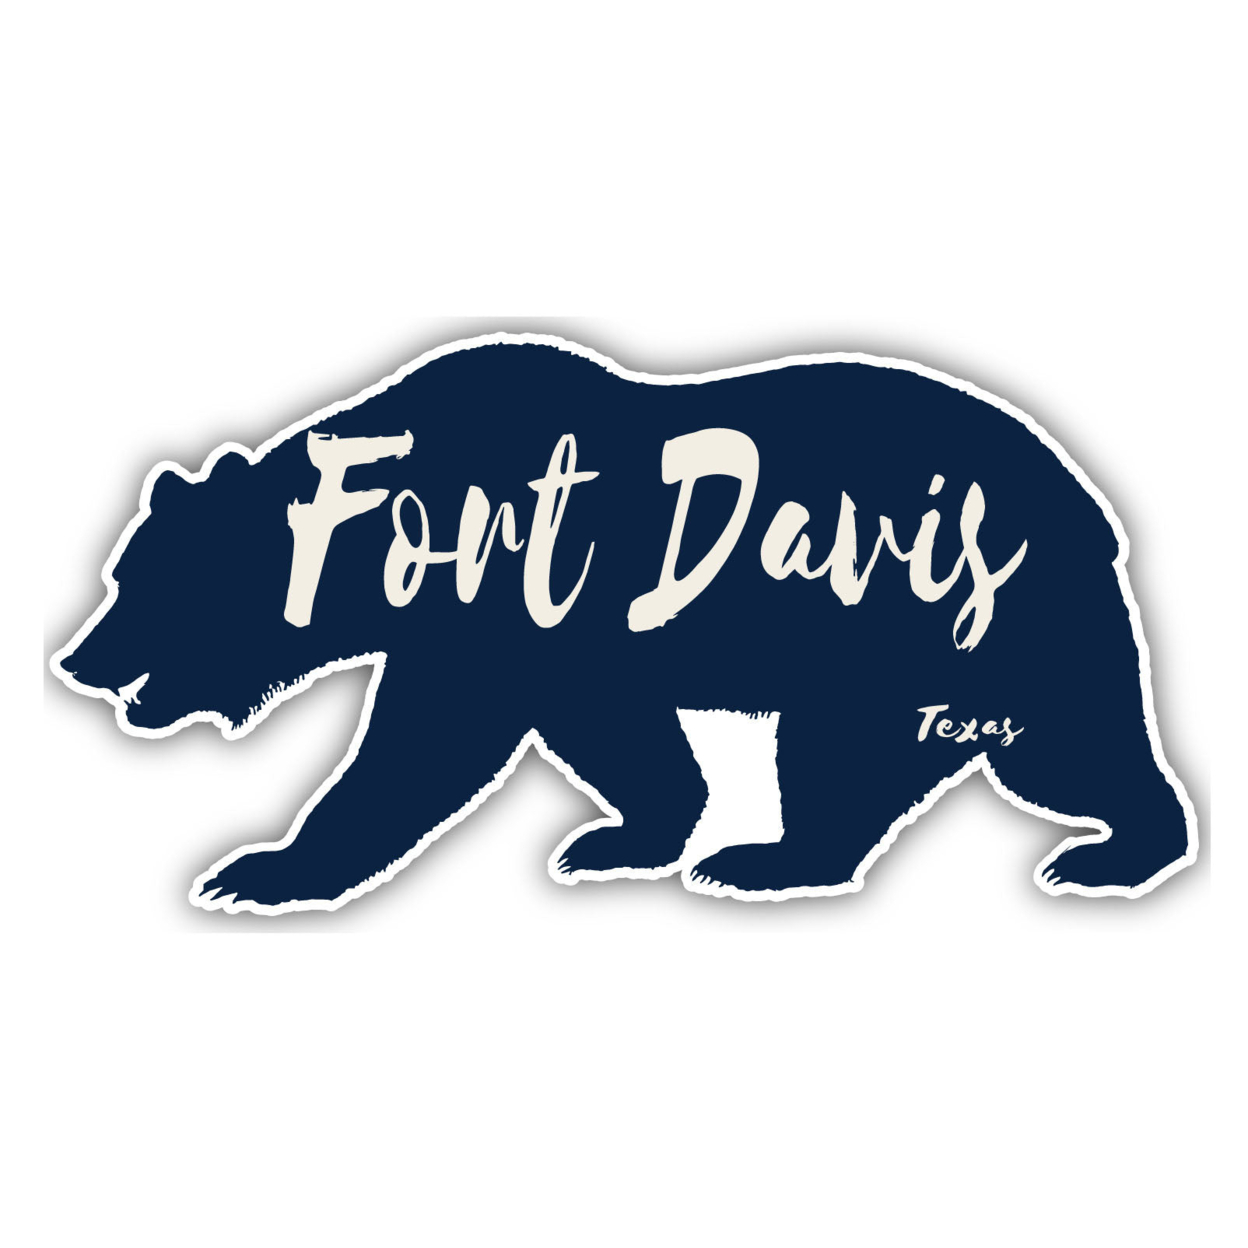 Fort Davis Texas Souvenir Decorative Stickers (Choose Theme And Size) - Single Unit, 10-Inch, Adventures Awaits